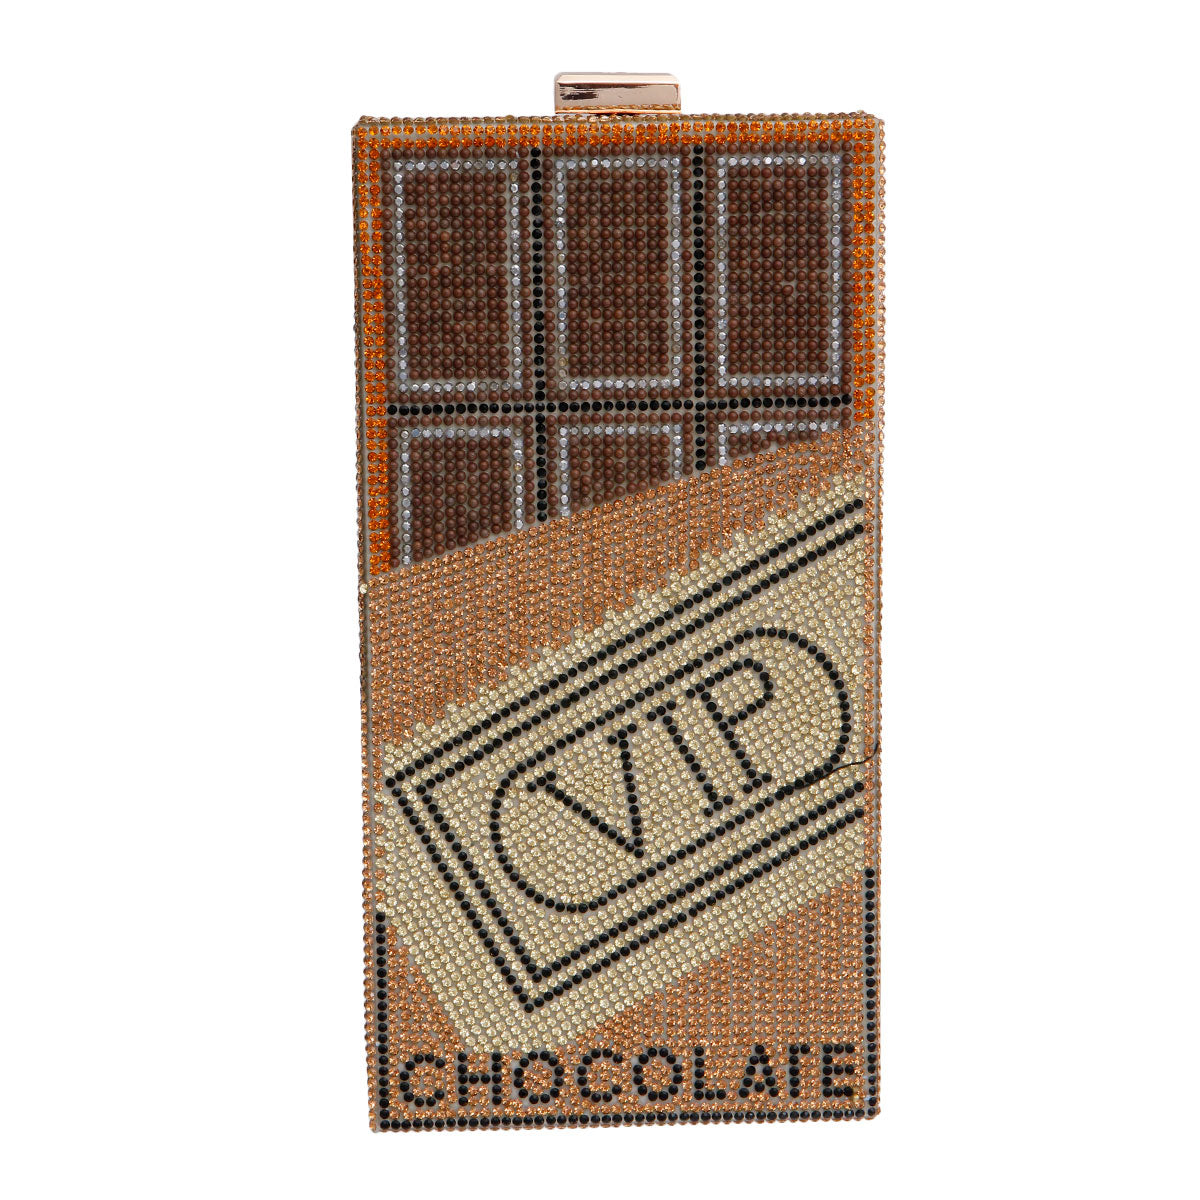 Bling Gold VIP Chocolate Bar Clutch